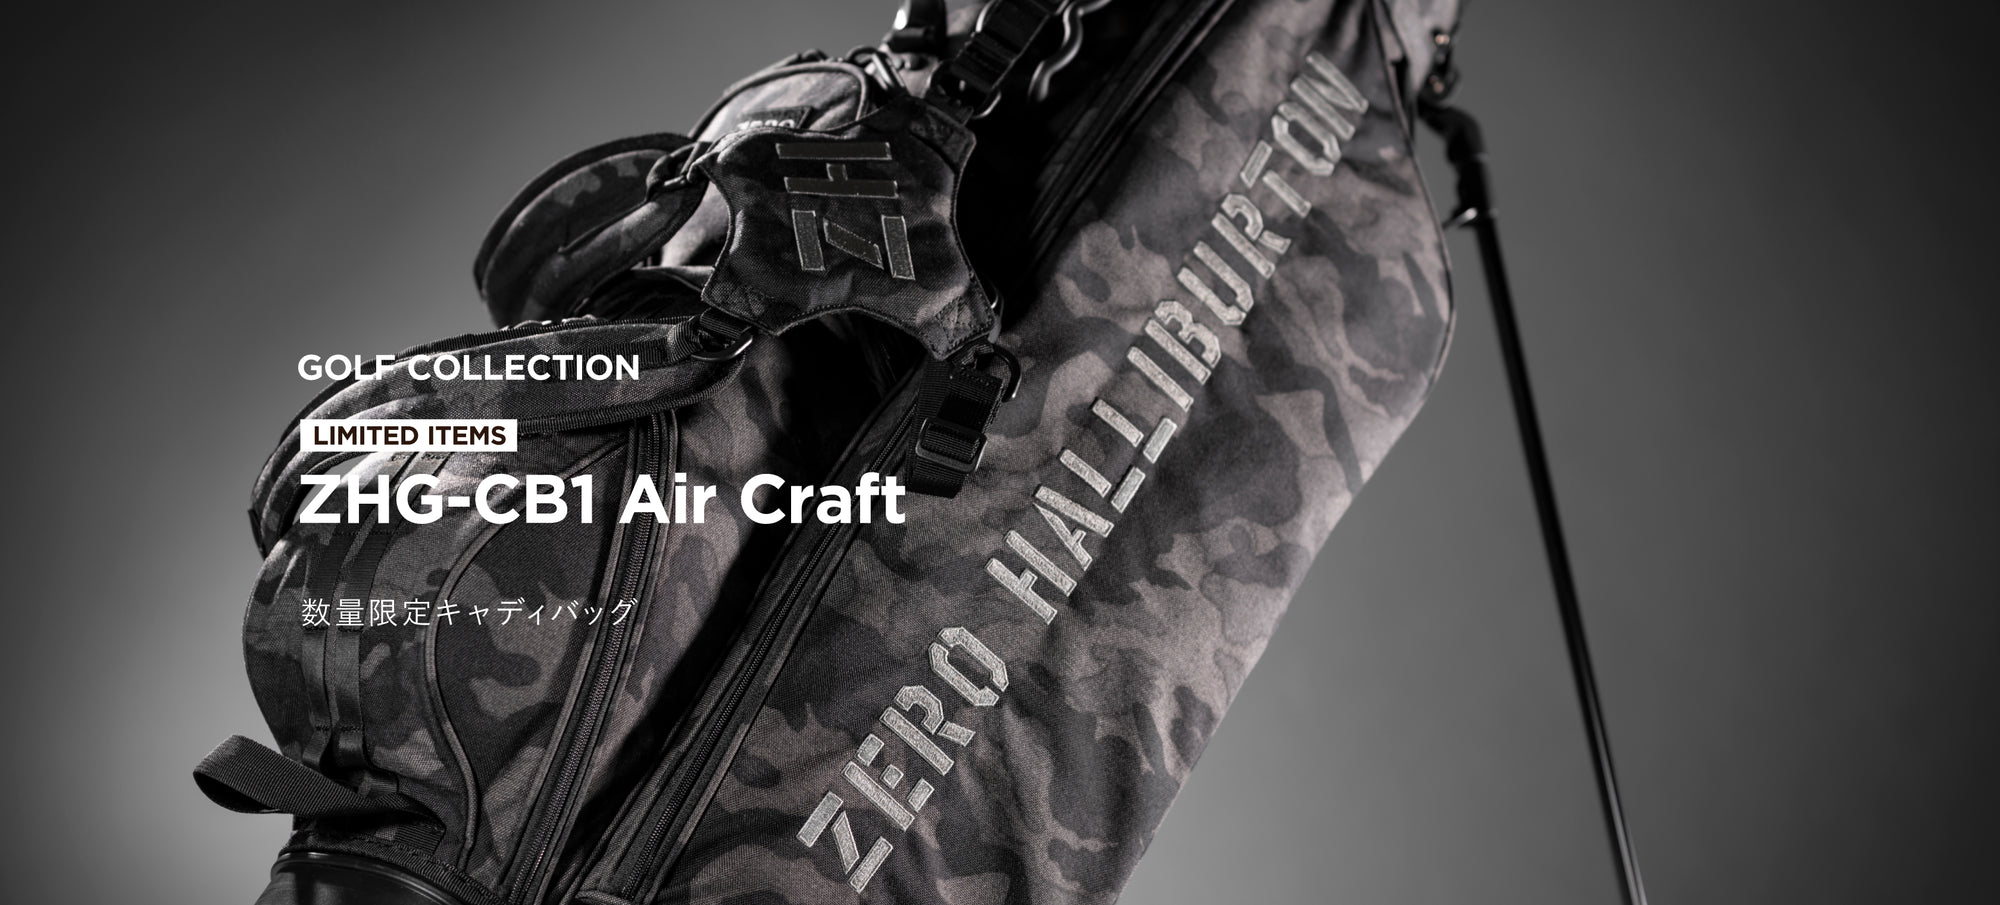 NEW｜【GOLF COLLECTION】限定キャディバッグ「ZHG-CB1 Air Craft」発売